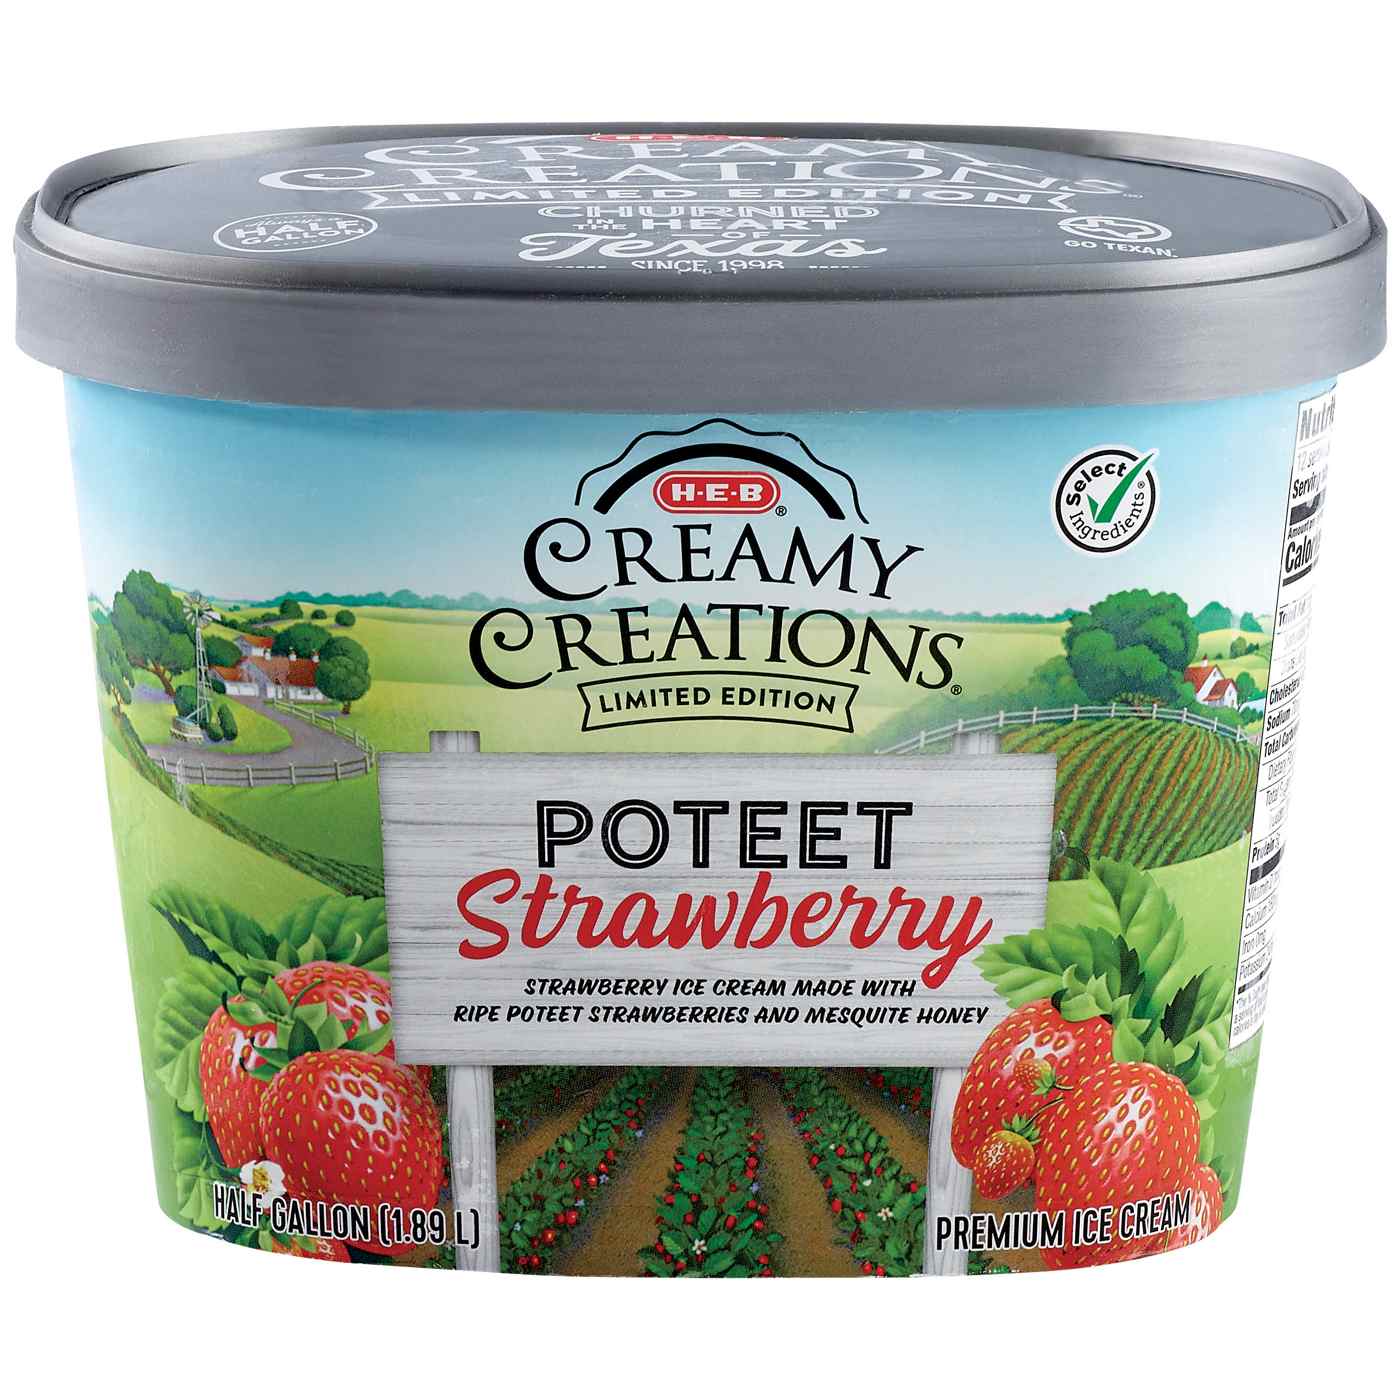 H-E-B Creamy Creations Poteet Strawberry Ice Cream; image 1 of 2